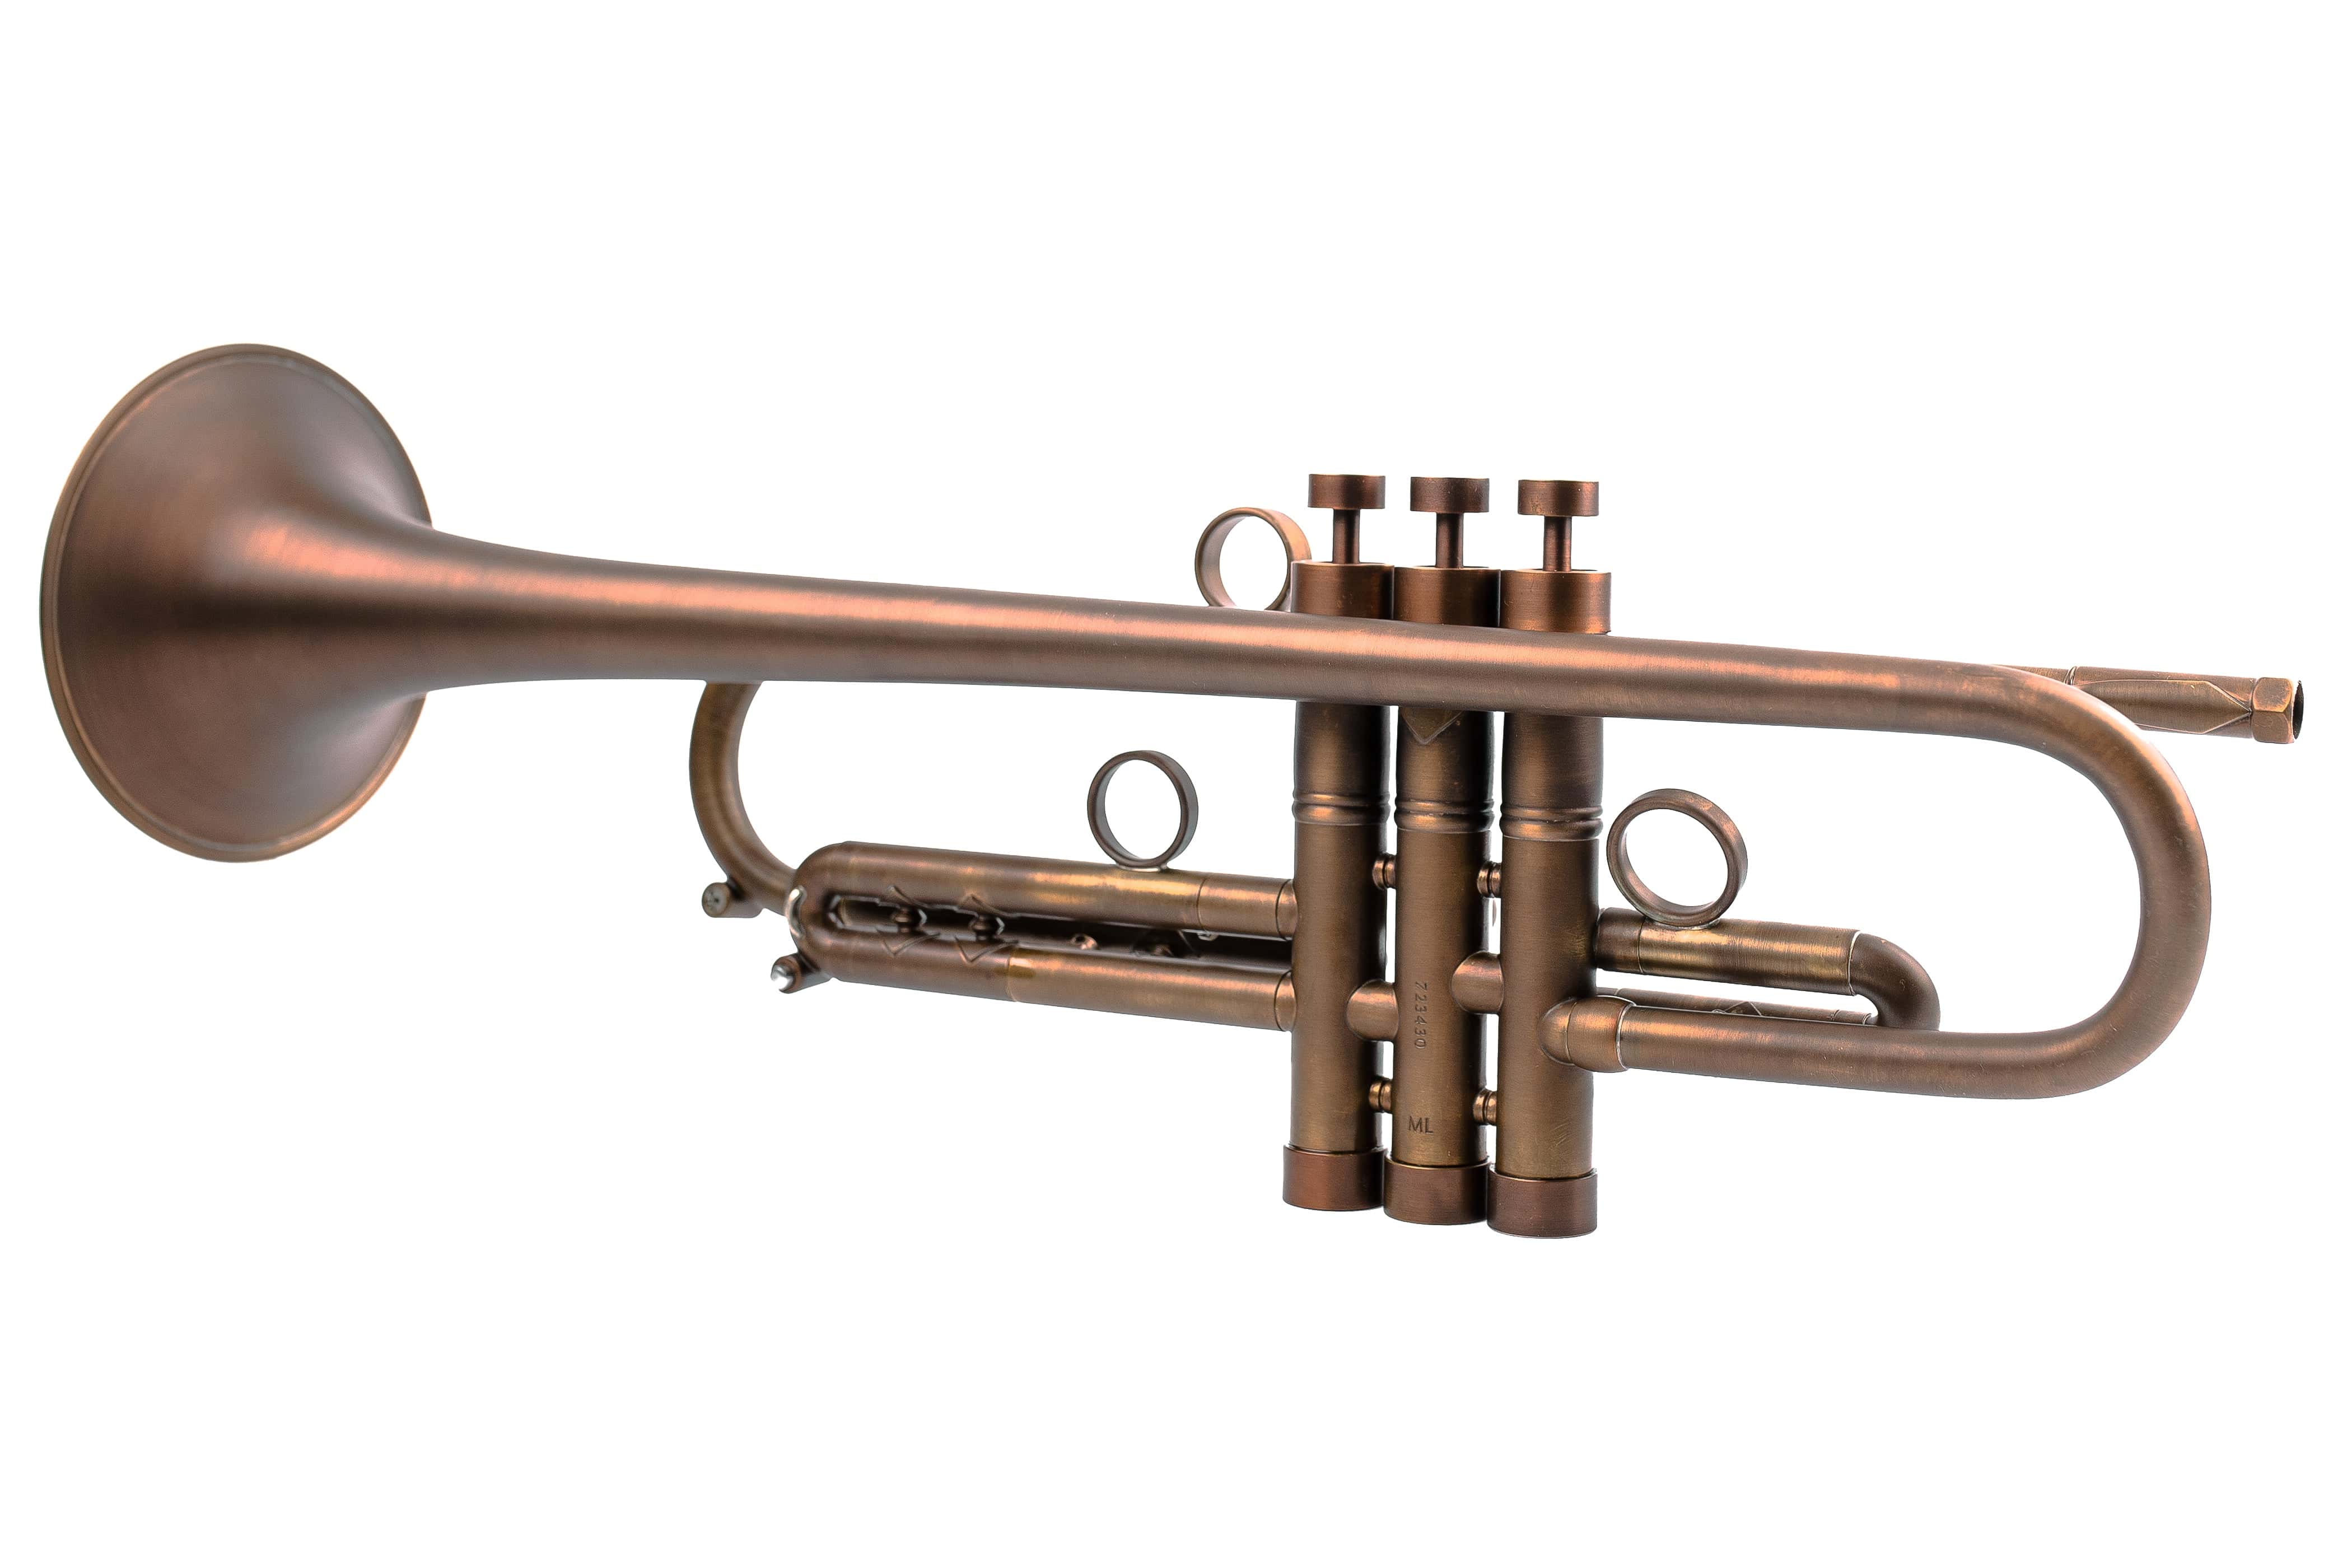 Bach Stradivarius 180-37 LR 25 trumpet customized by KGUmusic